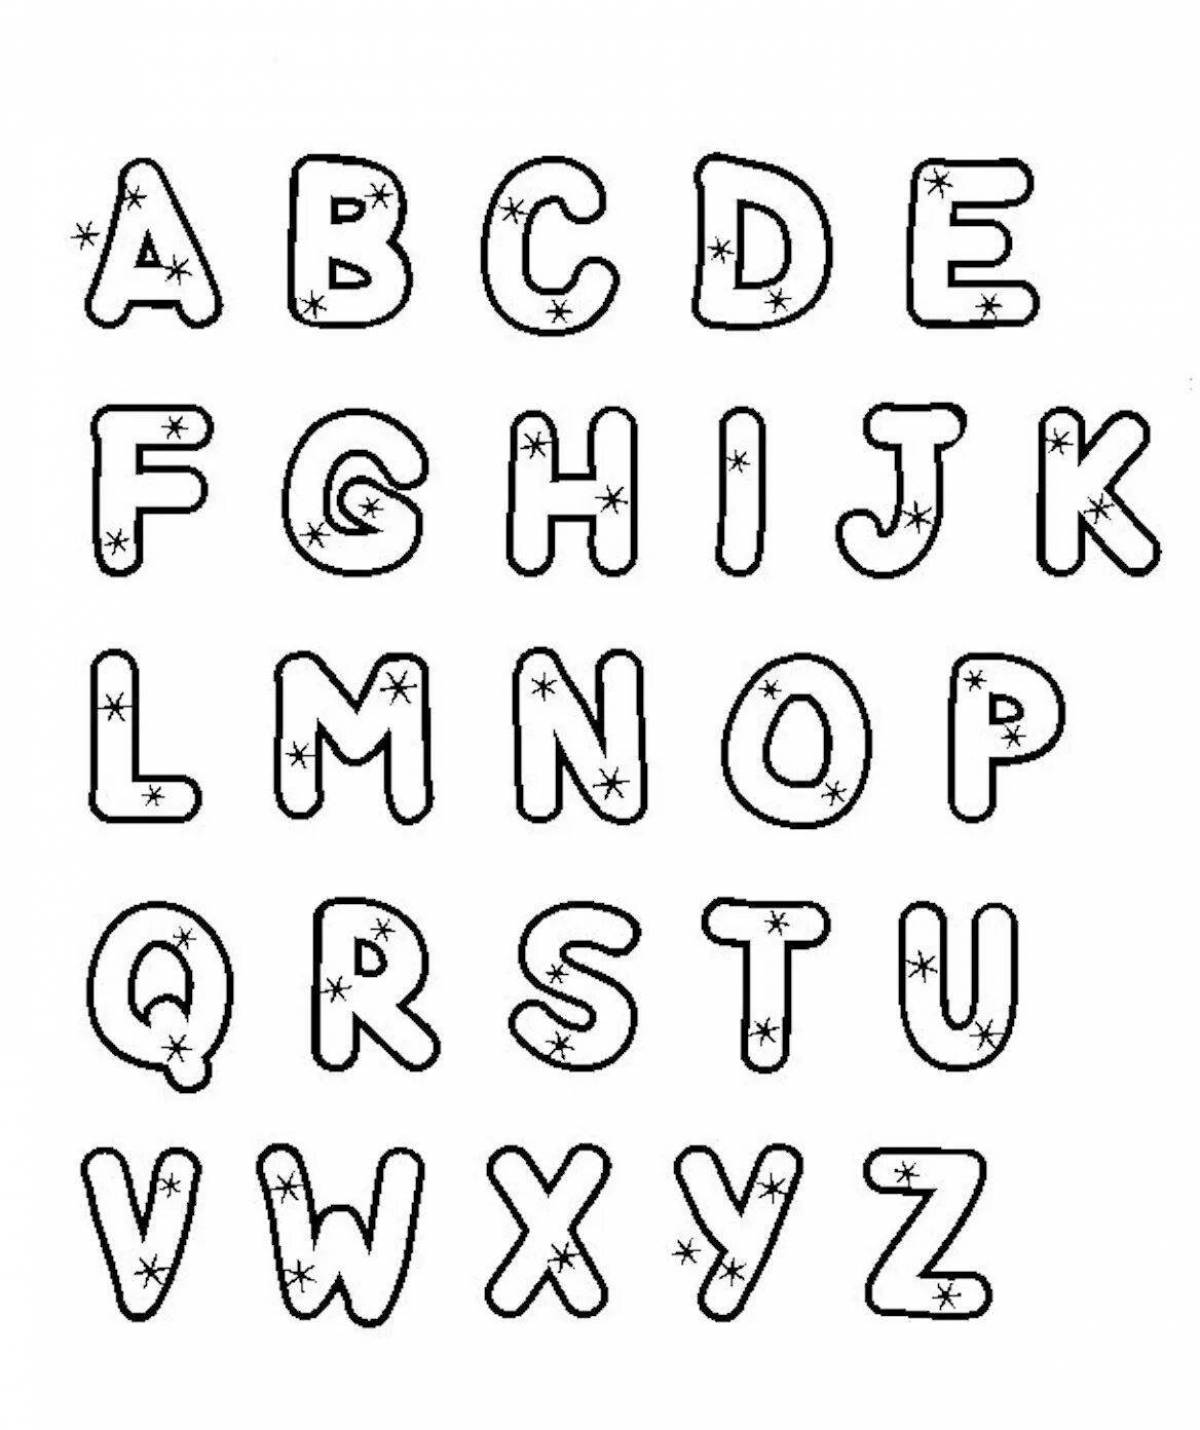 Увлекательная раскраска «знаки алфавита» от а до я